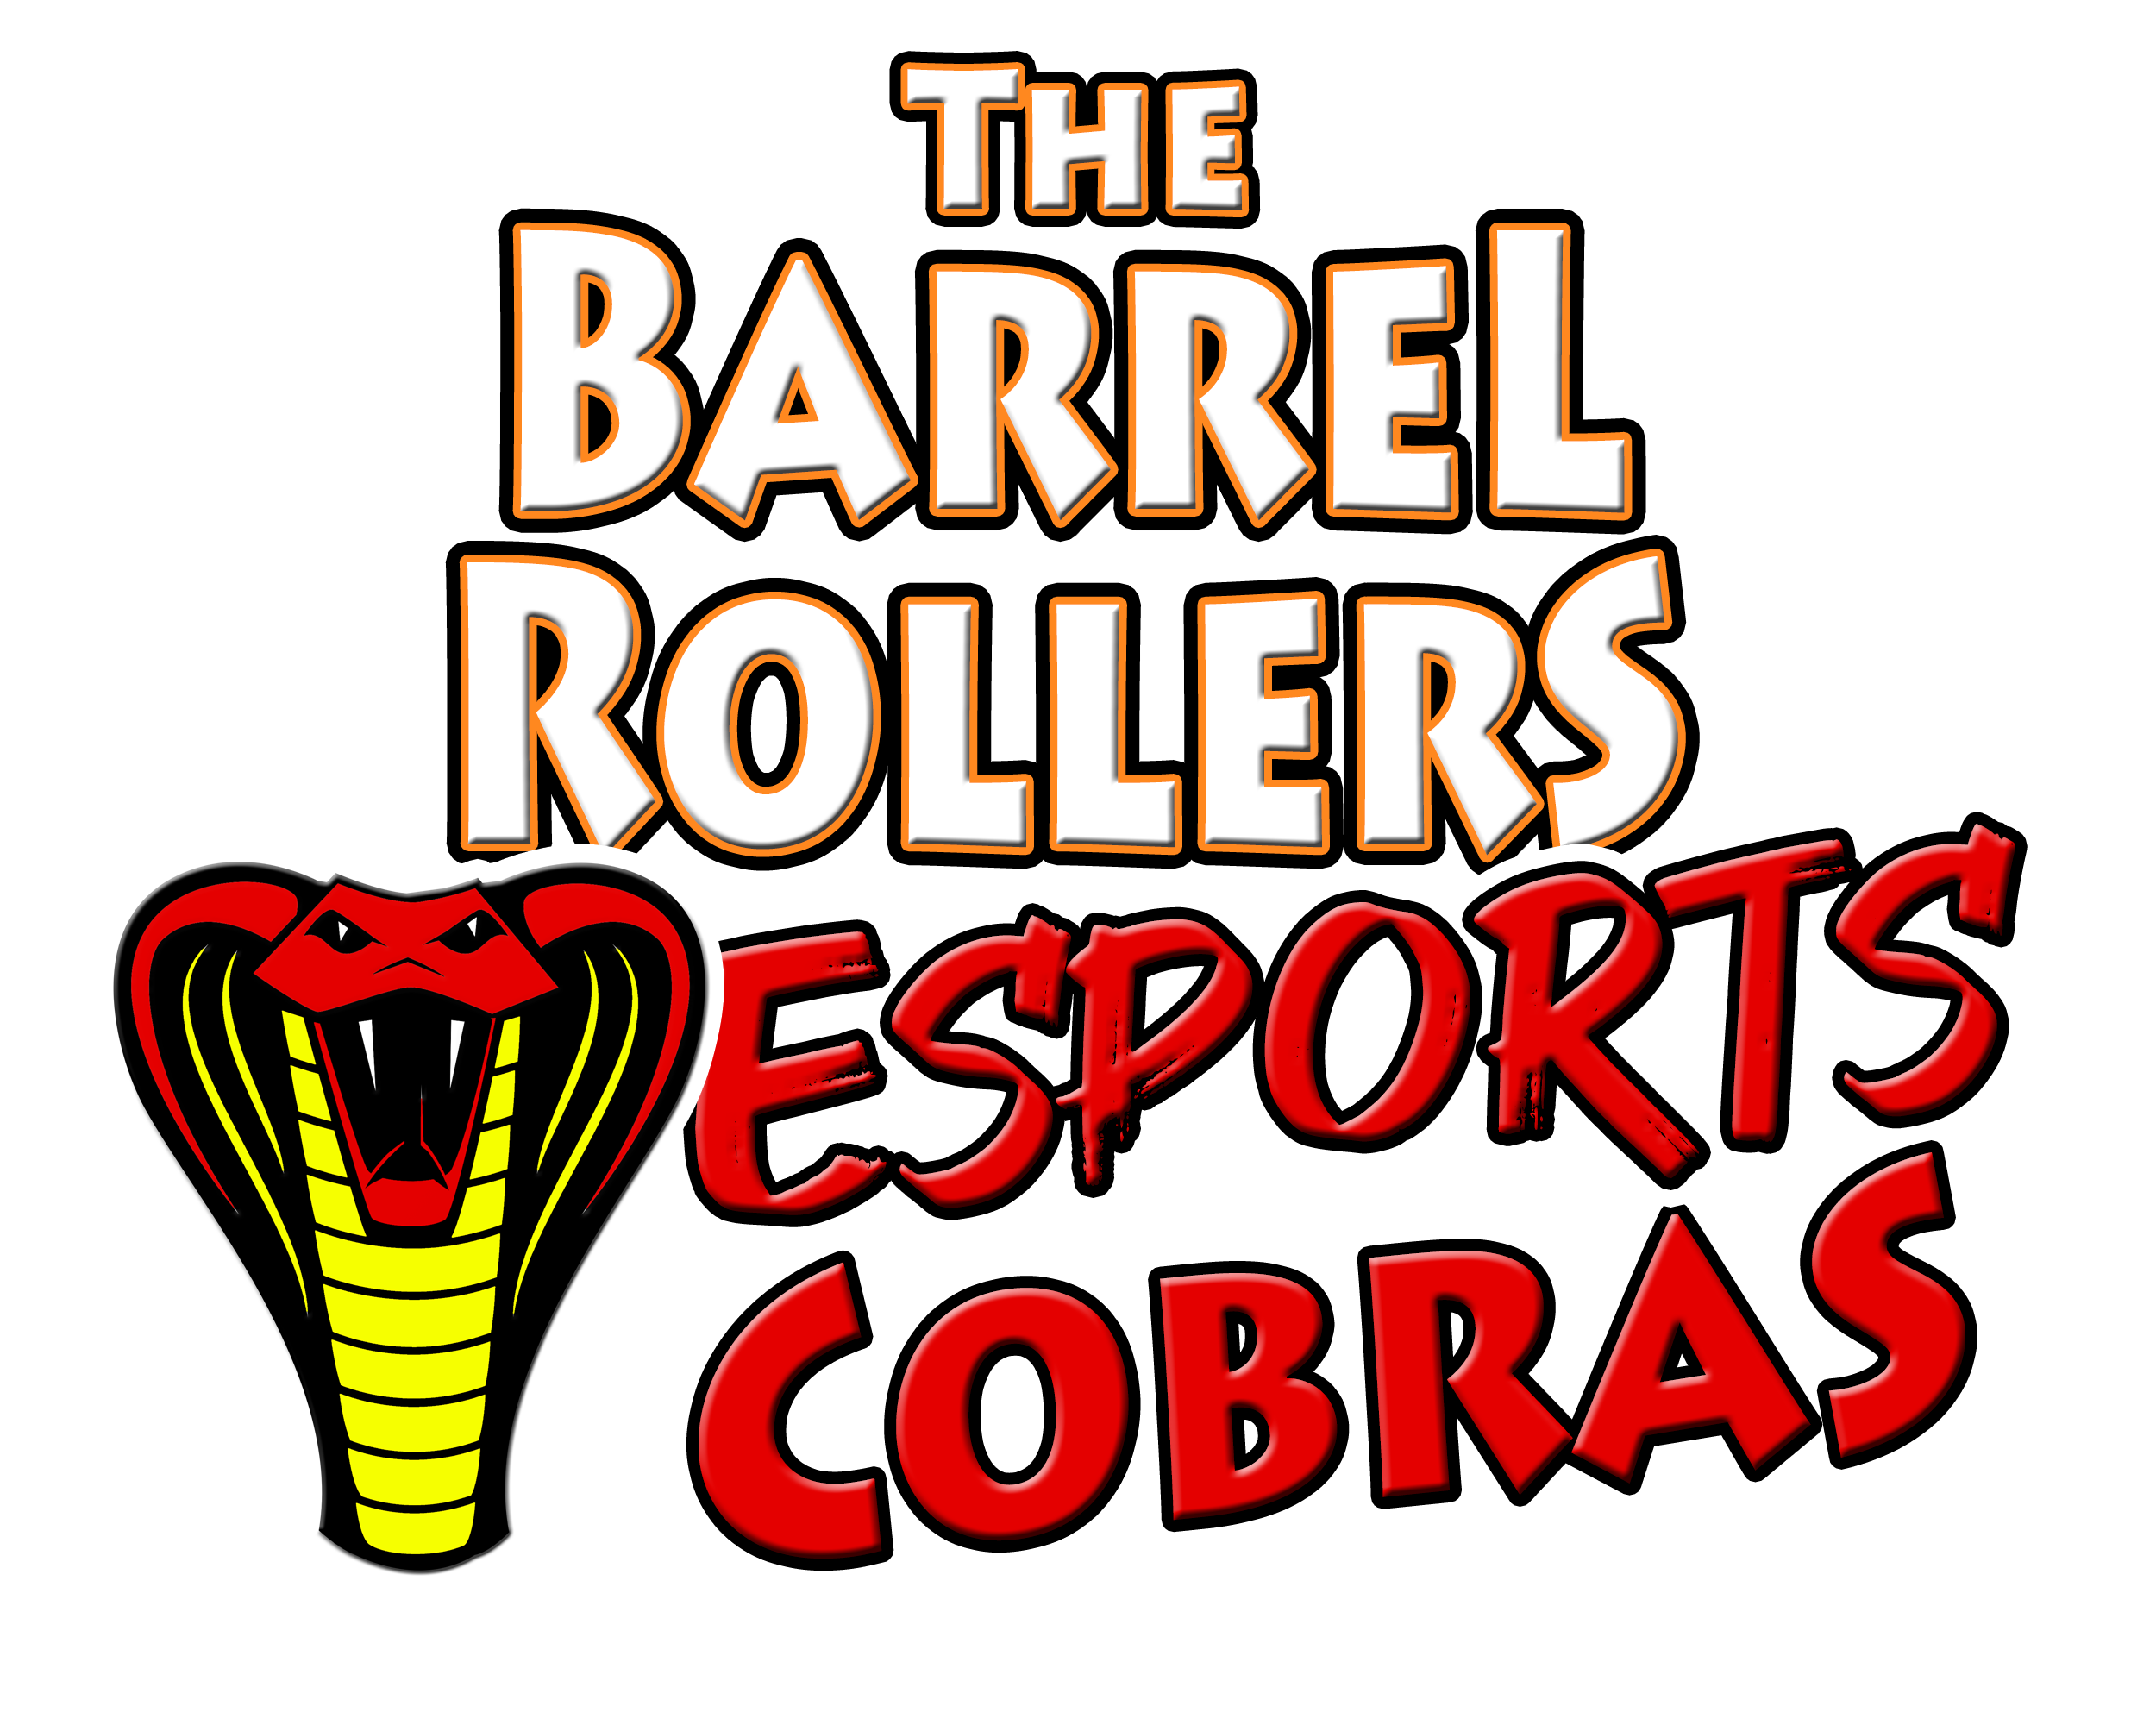 Barrel Rollers Cobras